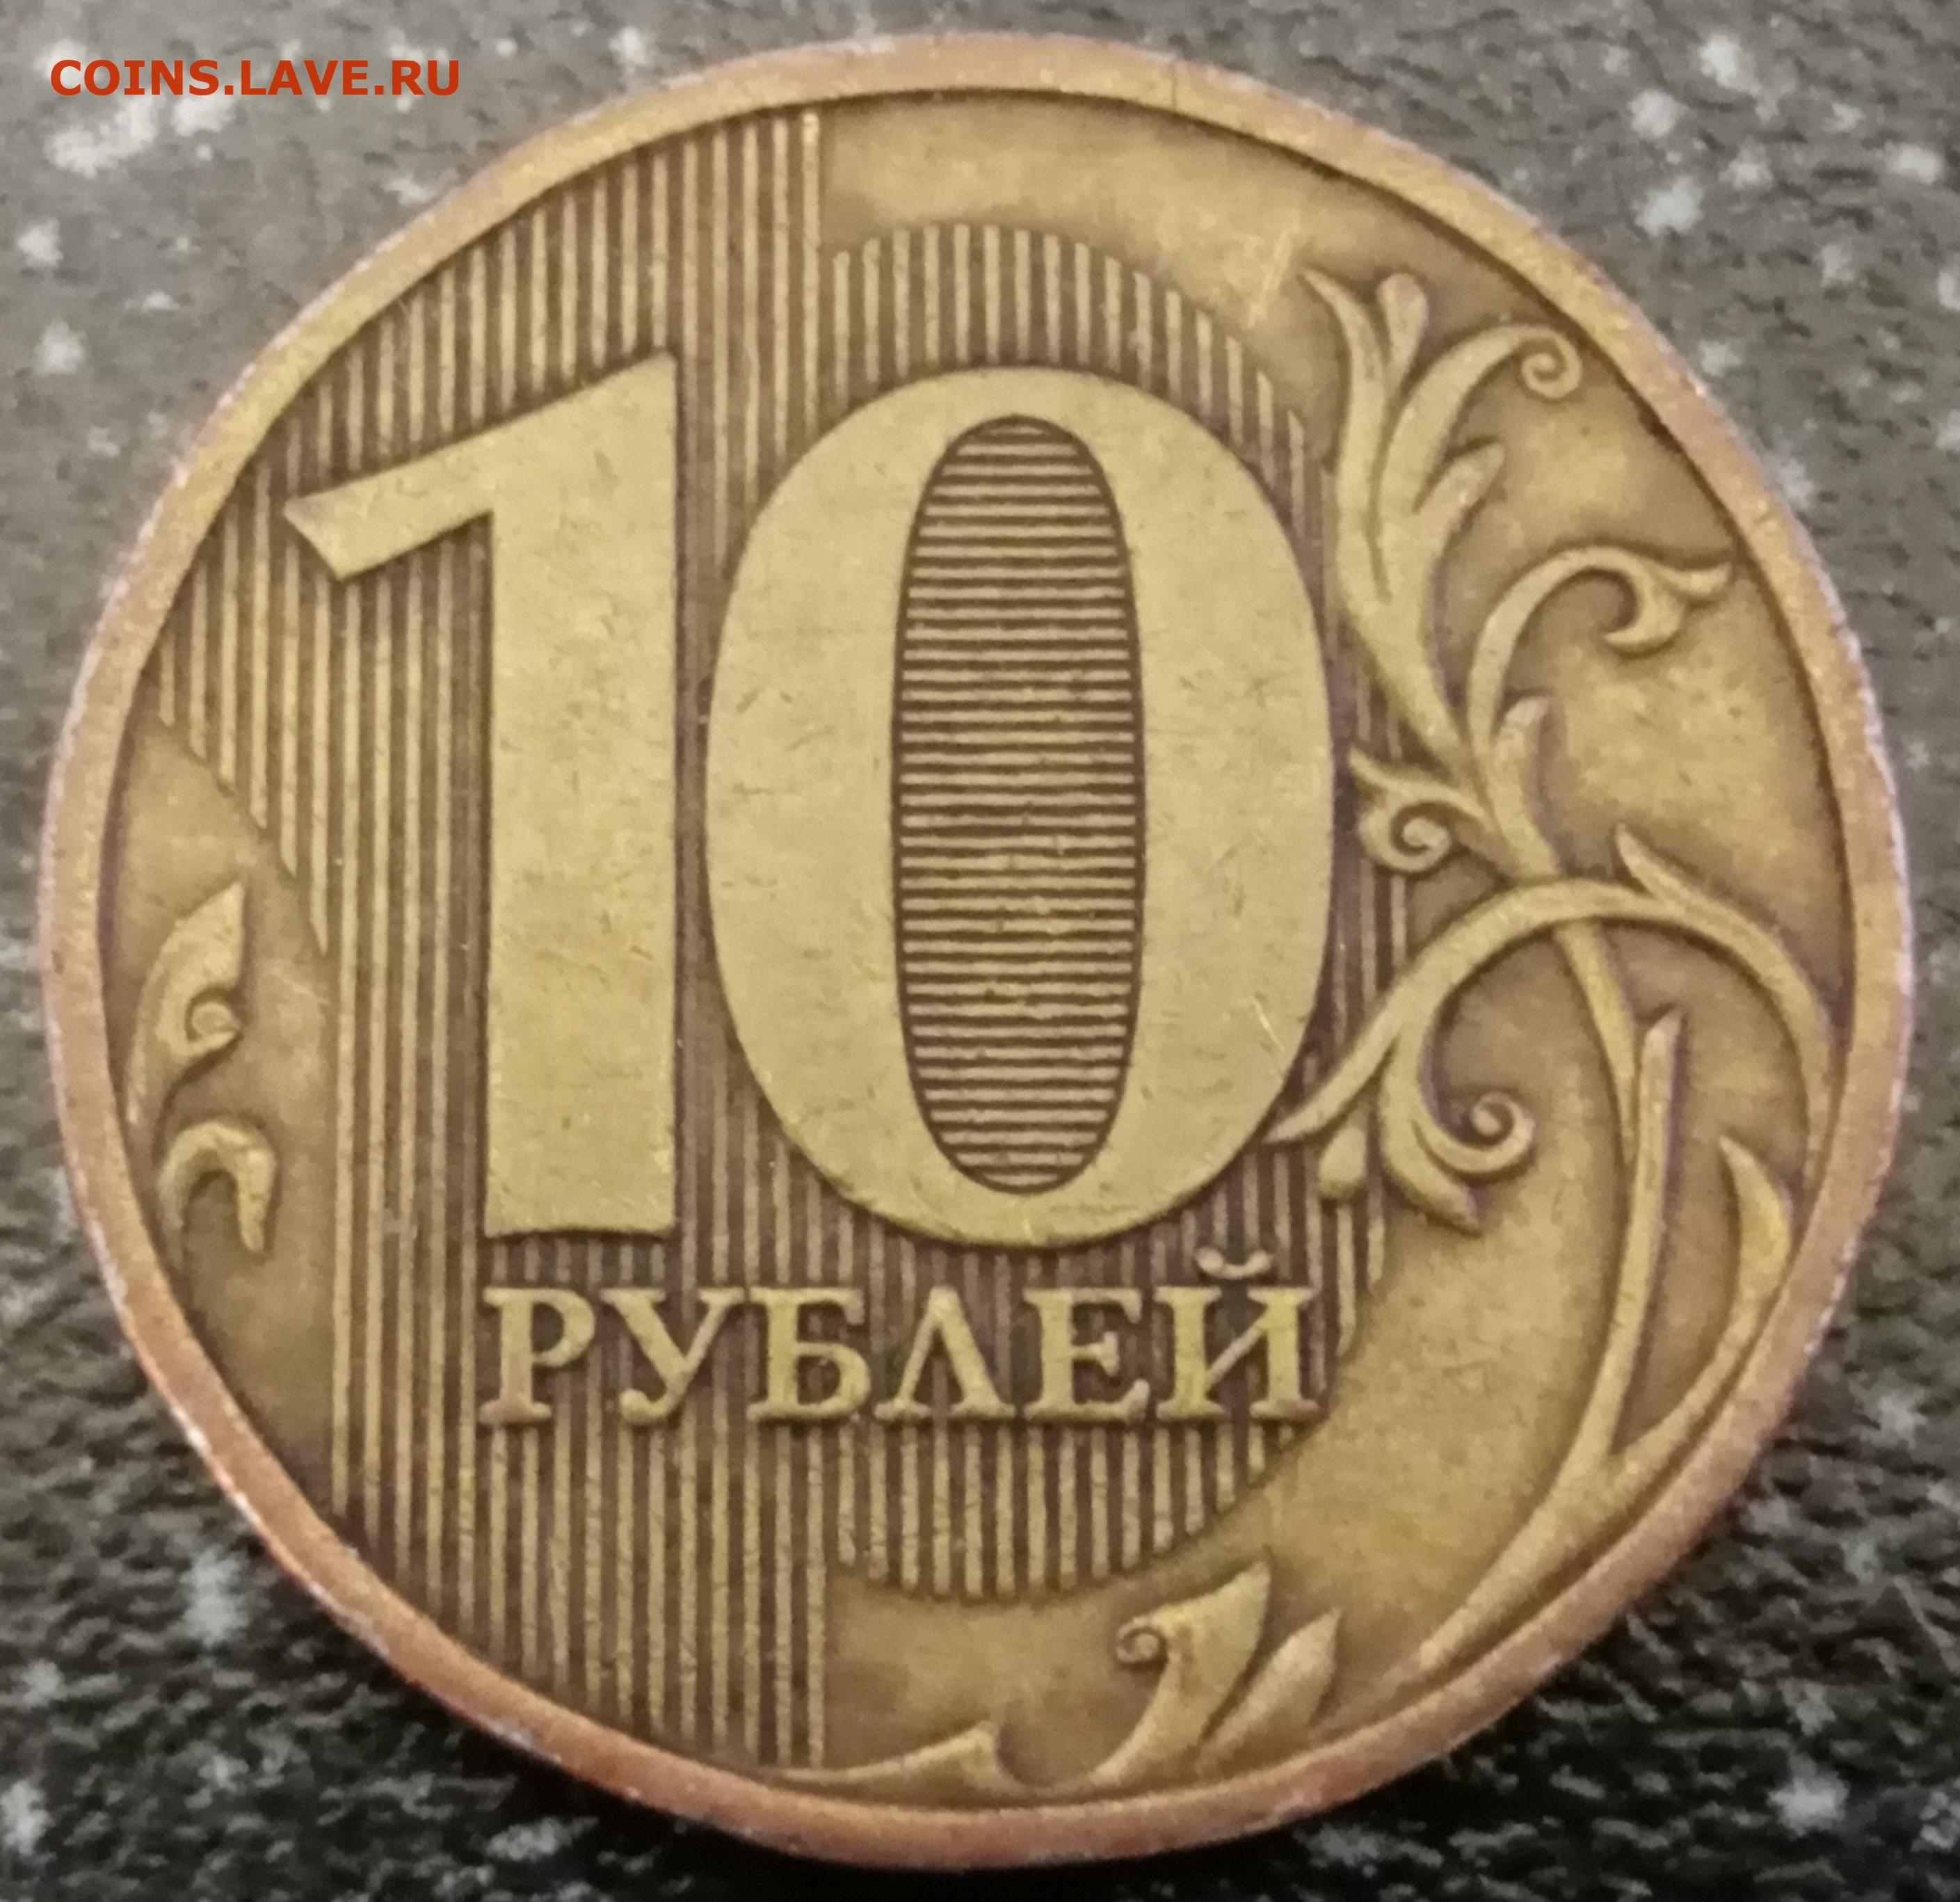 Steam рубли по 10 рублей фото 12